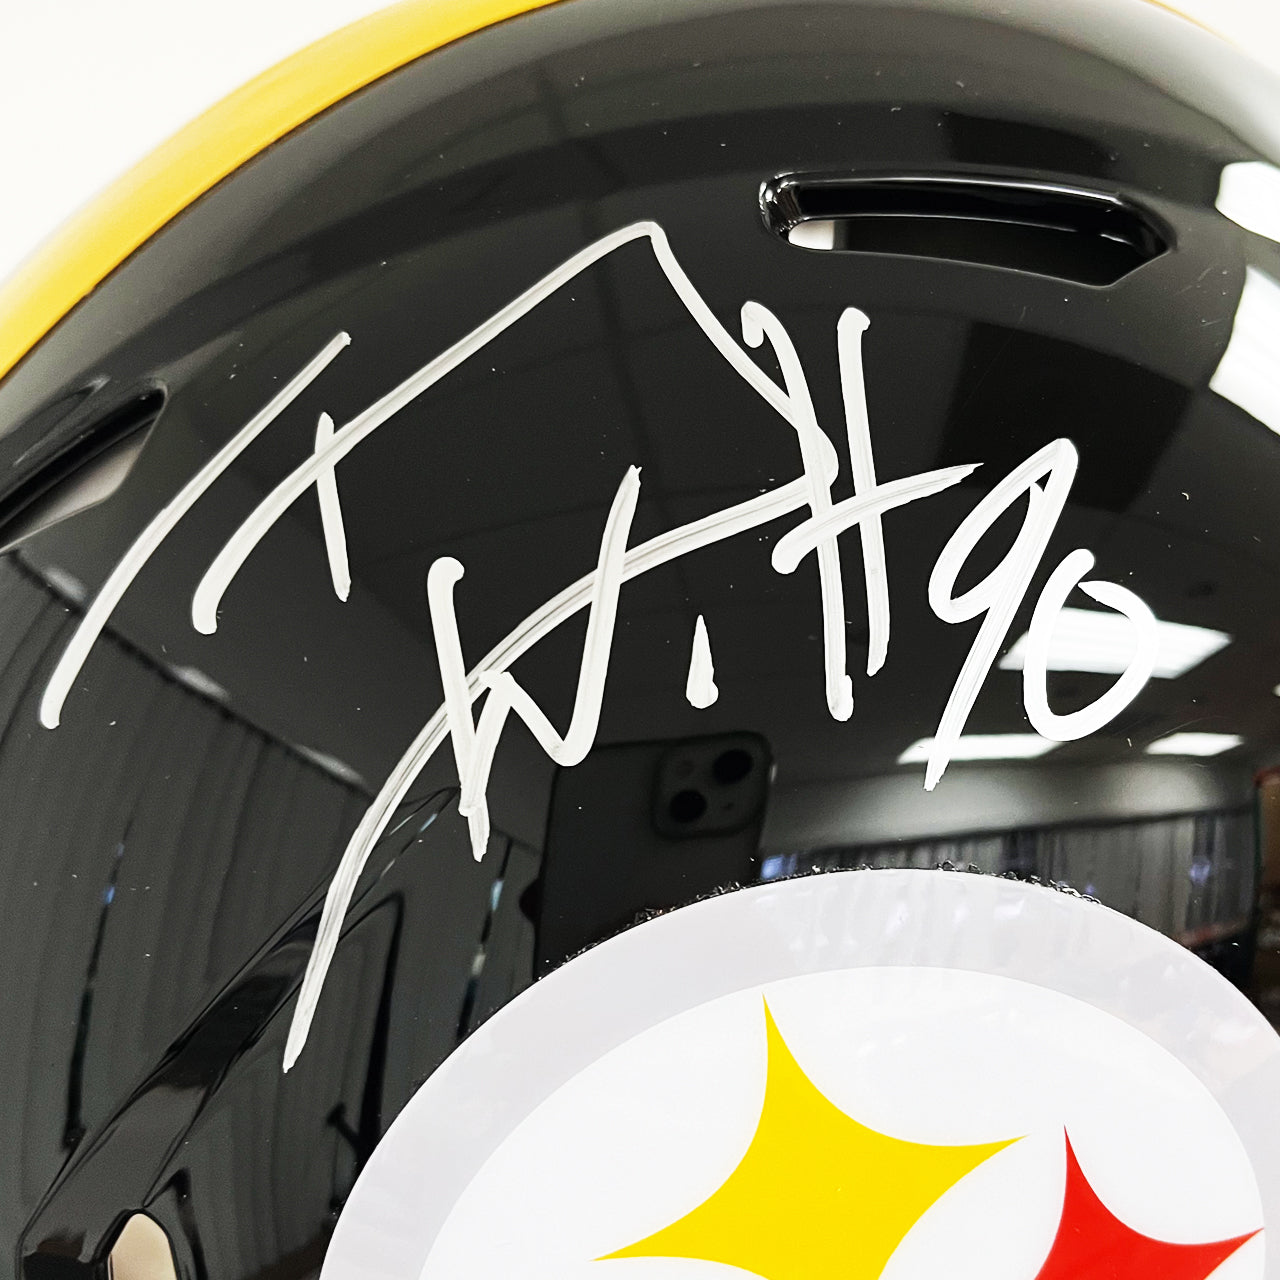 T.J. Watt Signed Steelers Speed Full Size Authentic Helmet